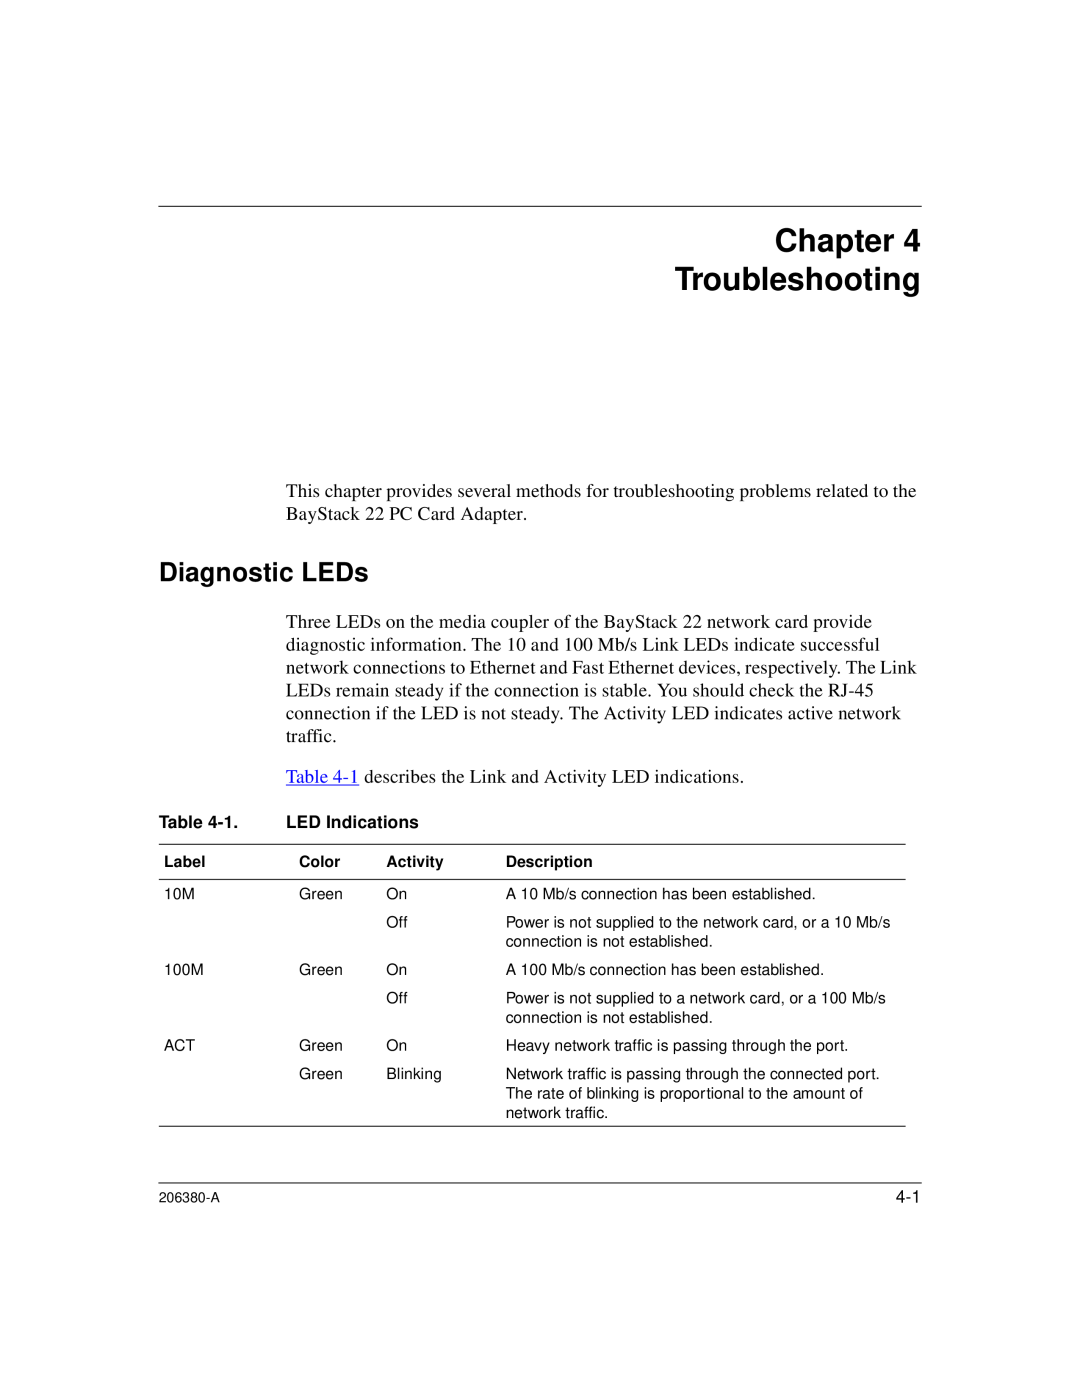 3Com 206380-A manual Chapter Troubleshooting, Diagnostic LEDs 